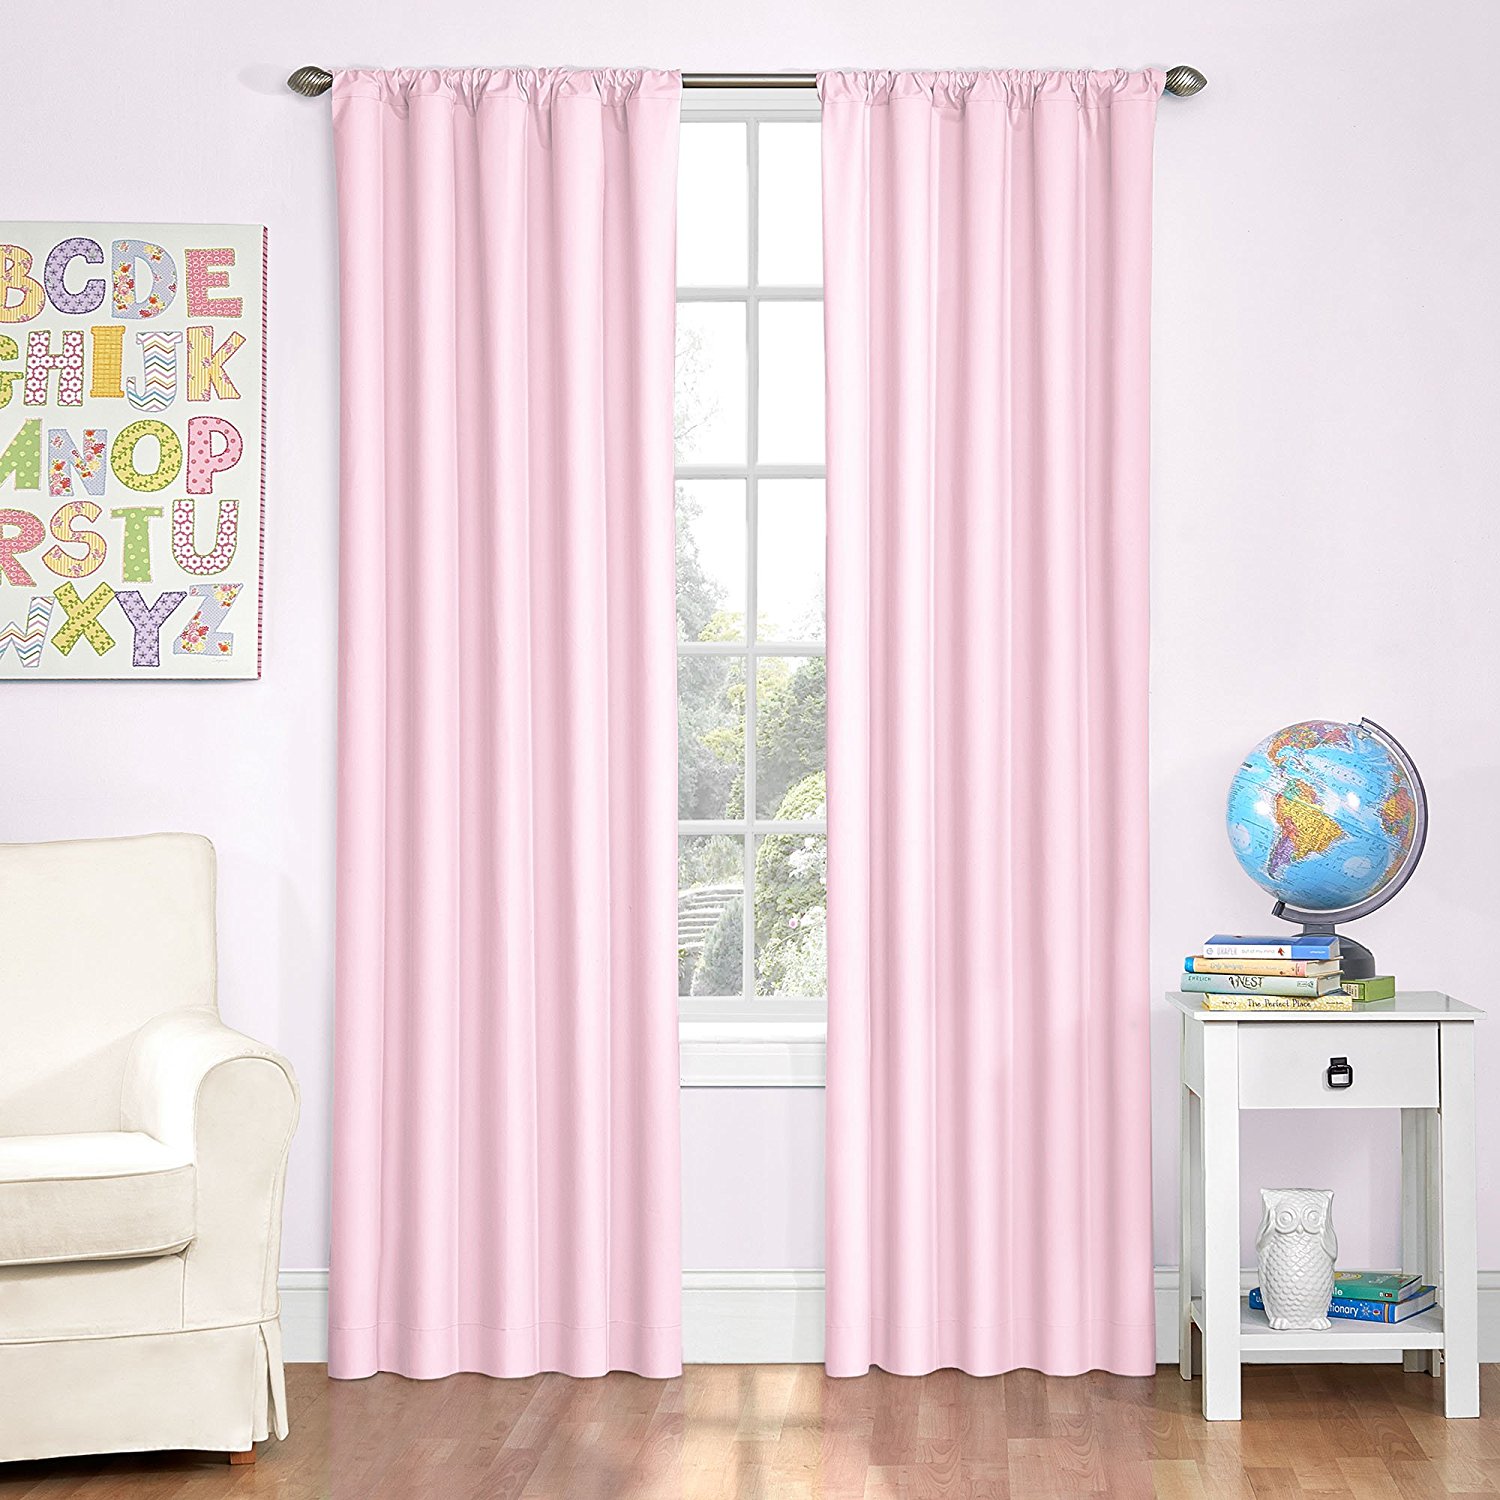 pink curtains amazon.com: eclipse kids microfiber room darkening window curtain panel, 42  by 84-inch, YTJMXZR